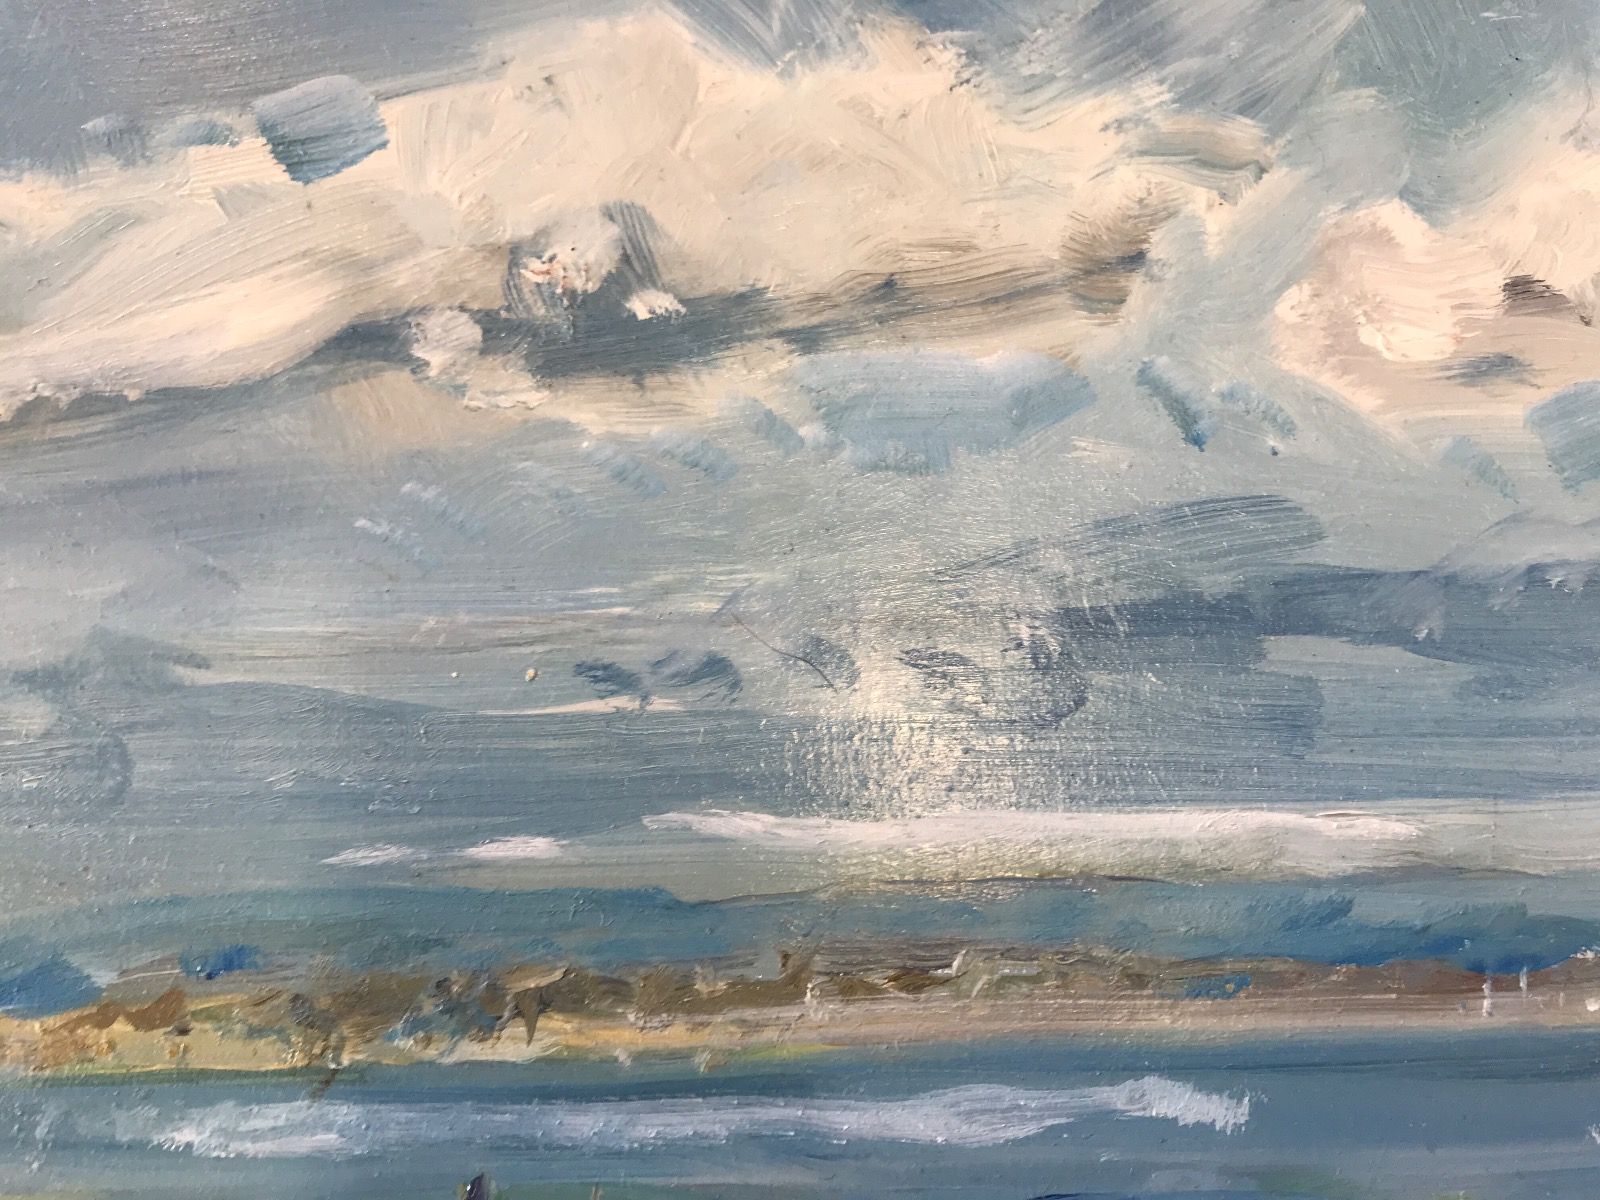 East Head, Windy Day, Original Oil Painting, Beach, Coastal, Landscape by Stephen Kinder